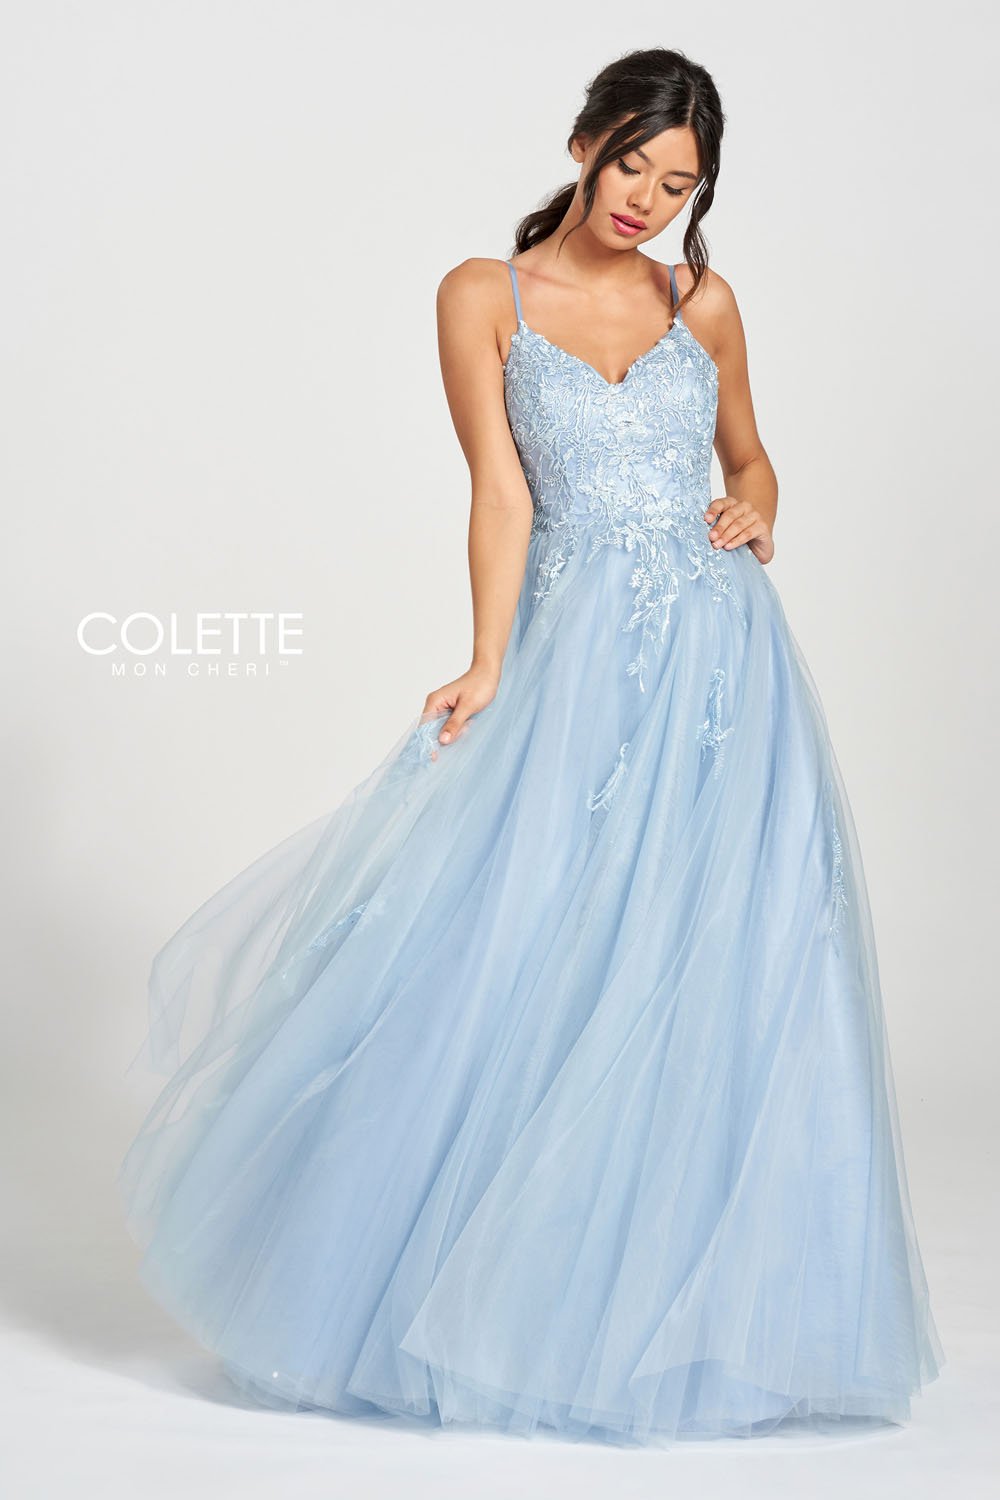 Colette CL12212 Misty Blue prom dresses.  Misty Blue prom dresses image by Colette.